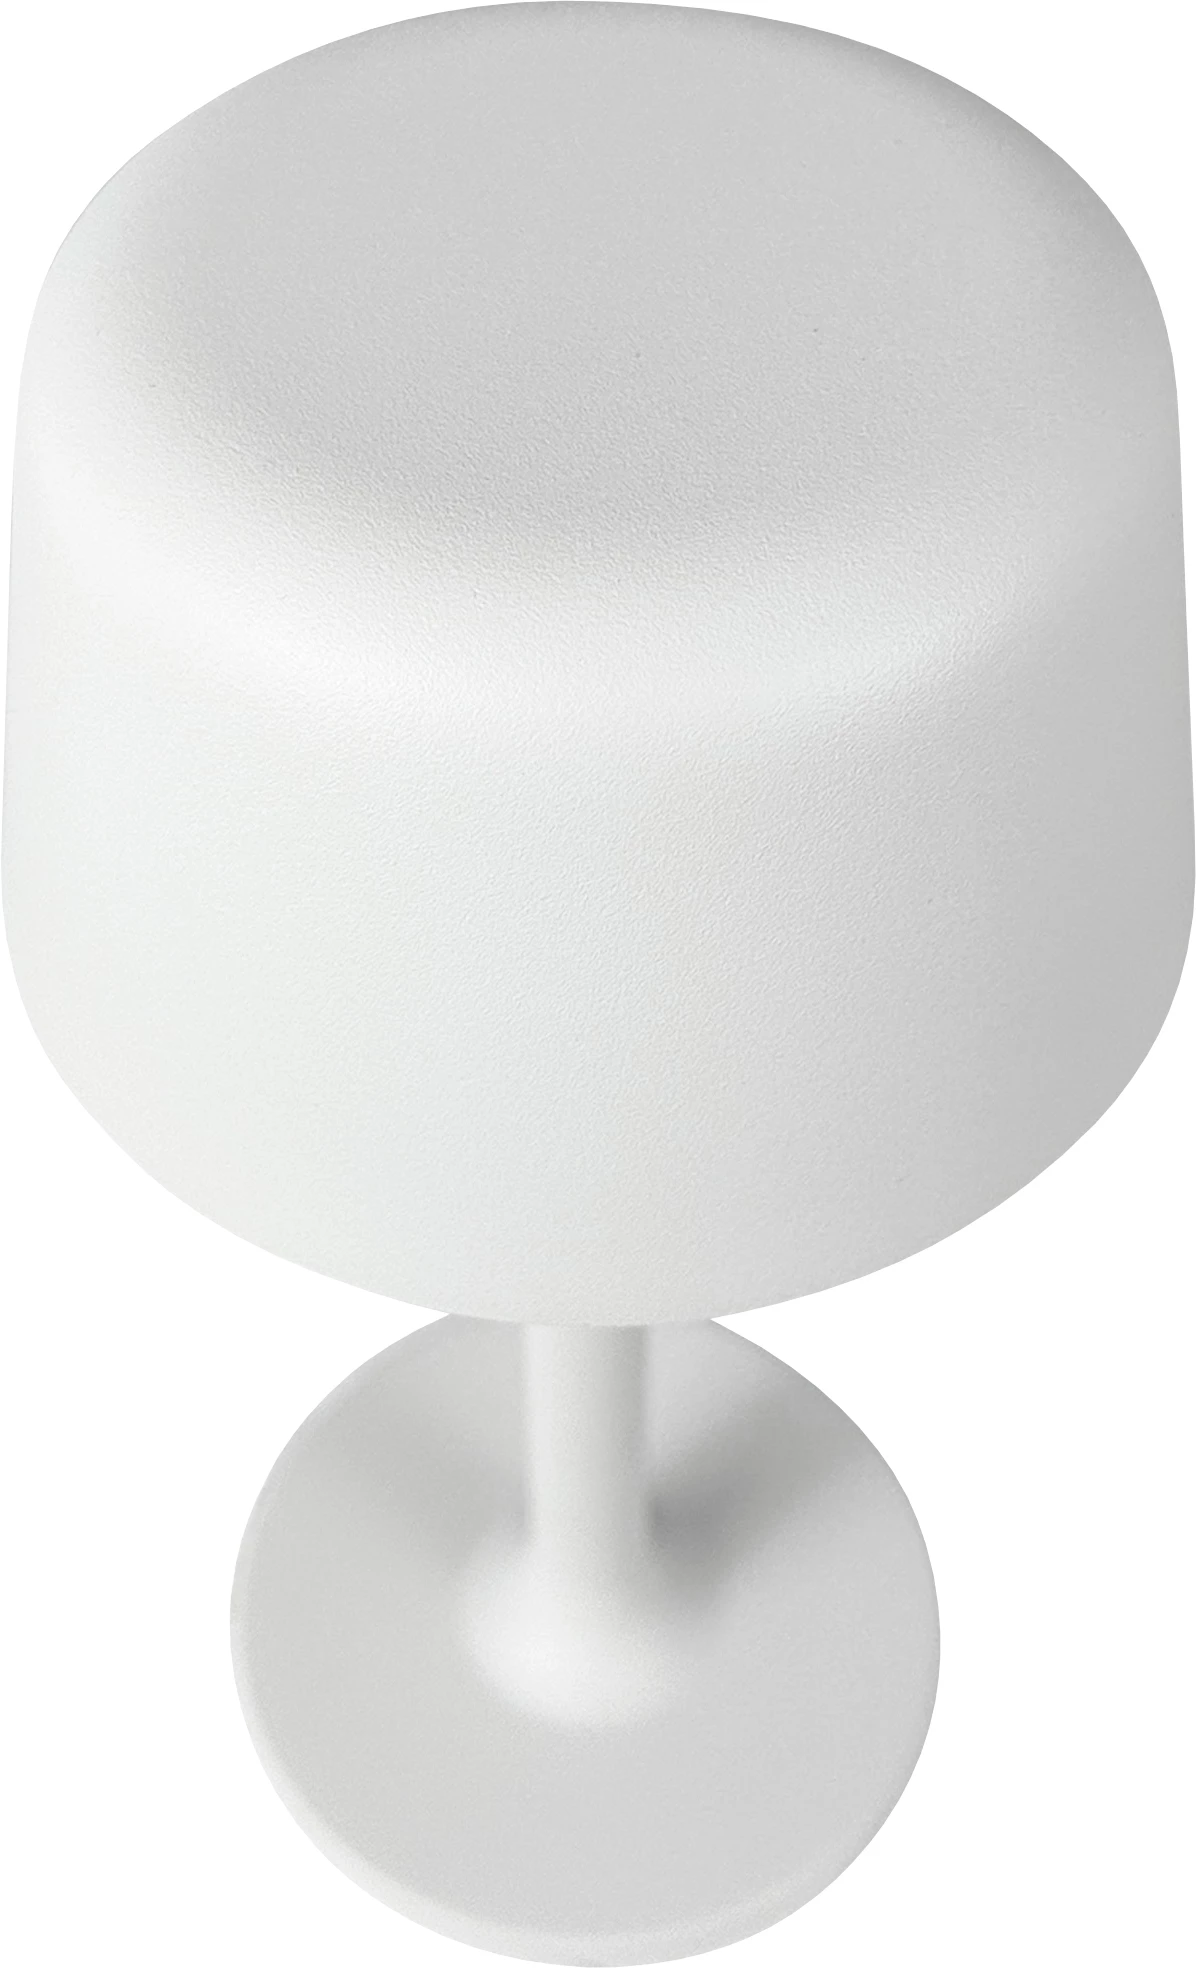 Dyberg Larsen Flow bordlampe med 3-trins lysstyrke, hvid